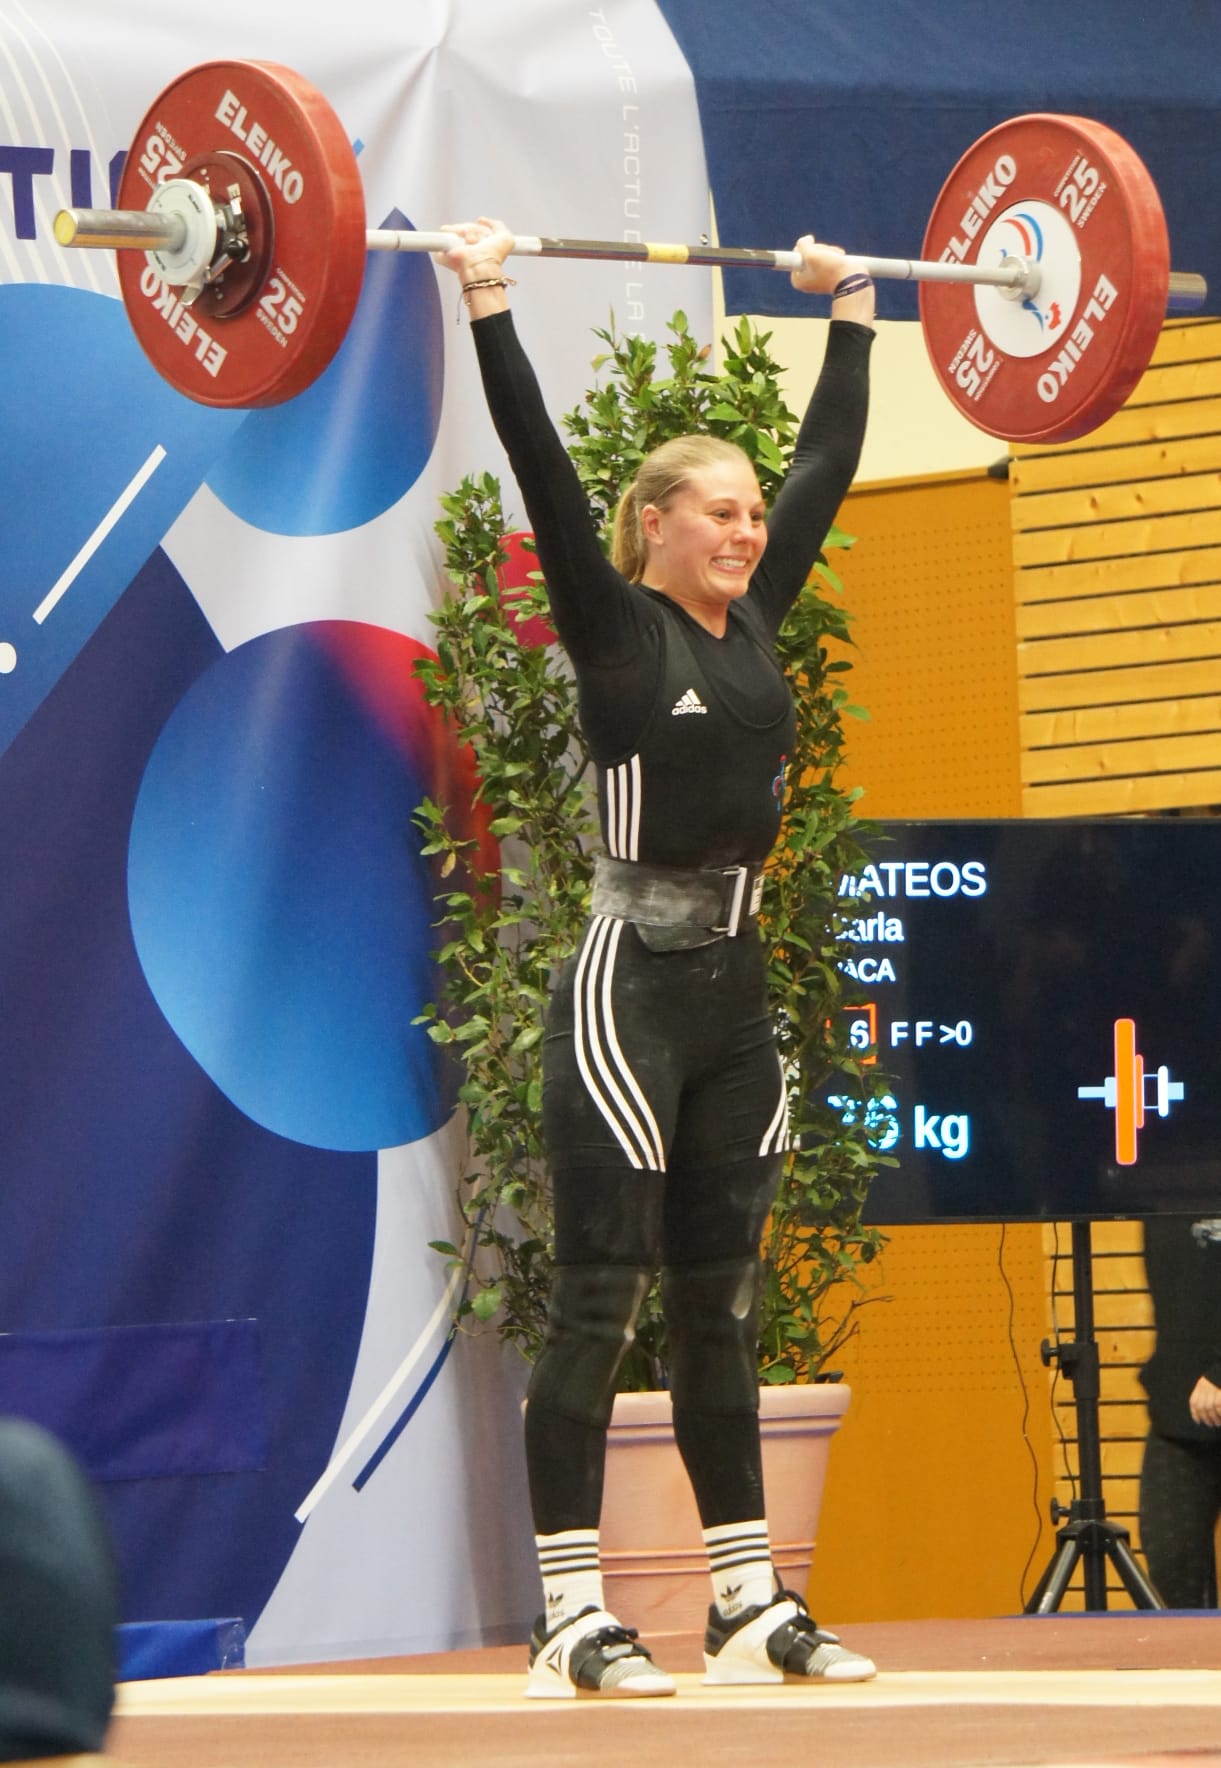 Carla, vice-championne de France U17 -59kg